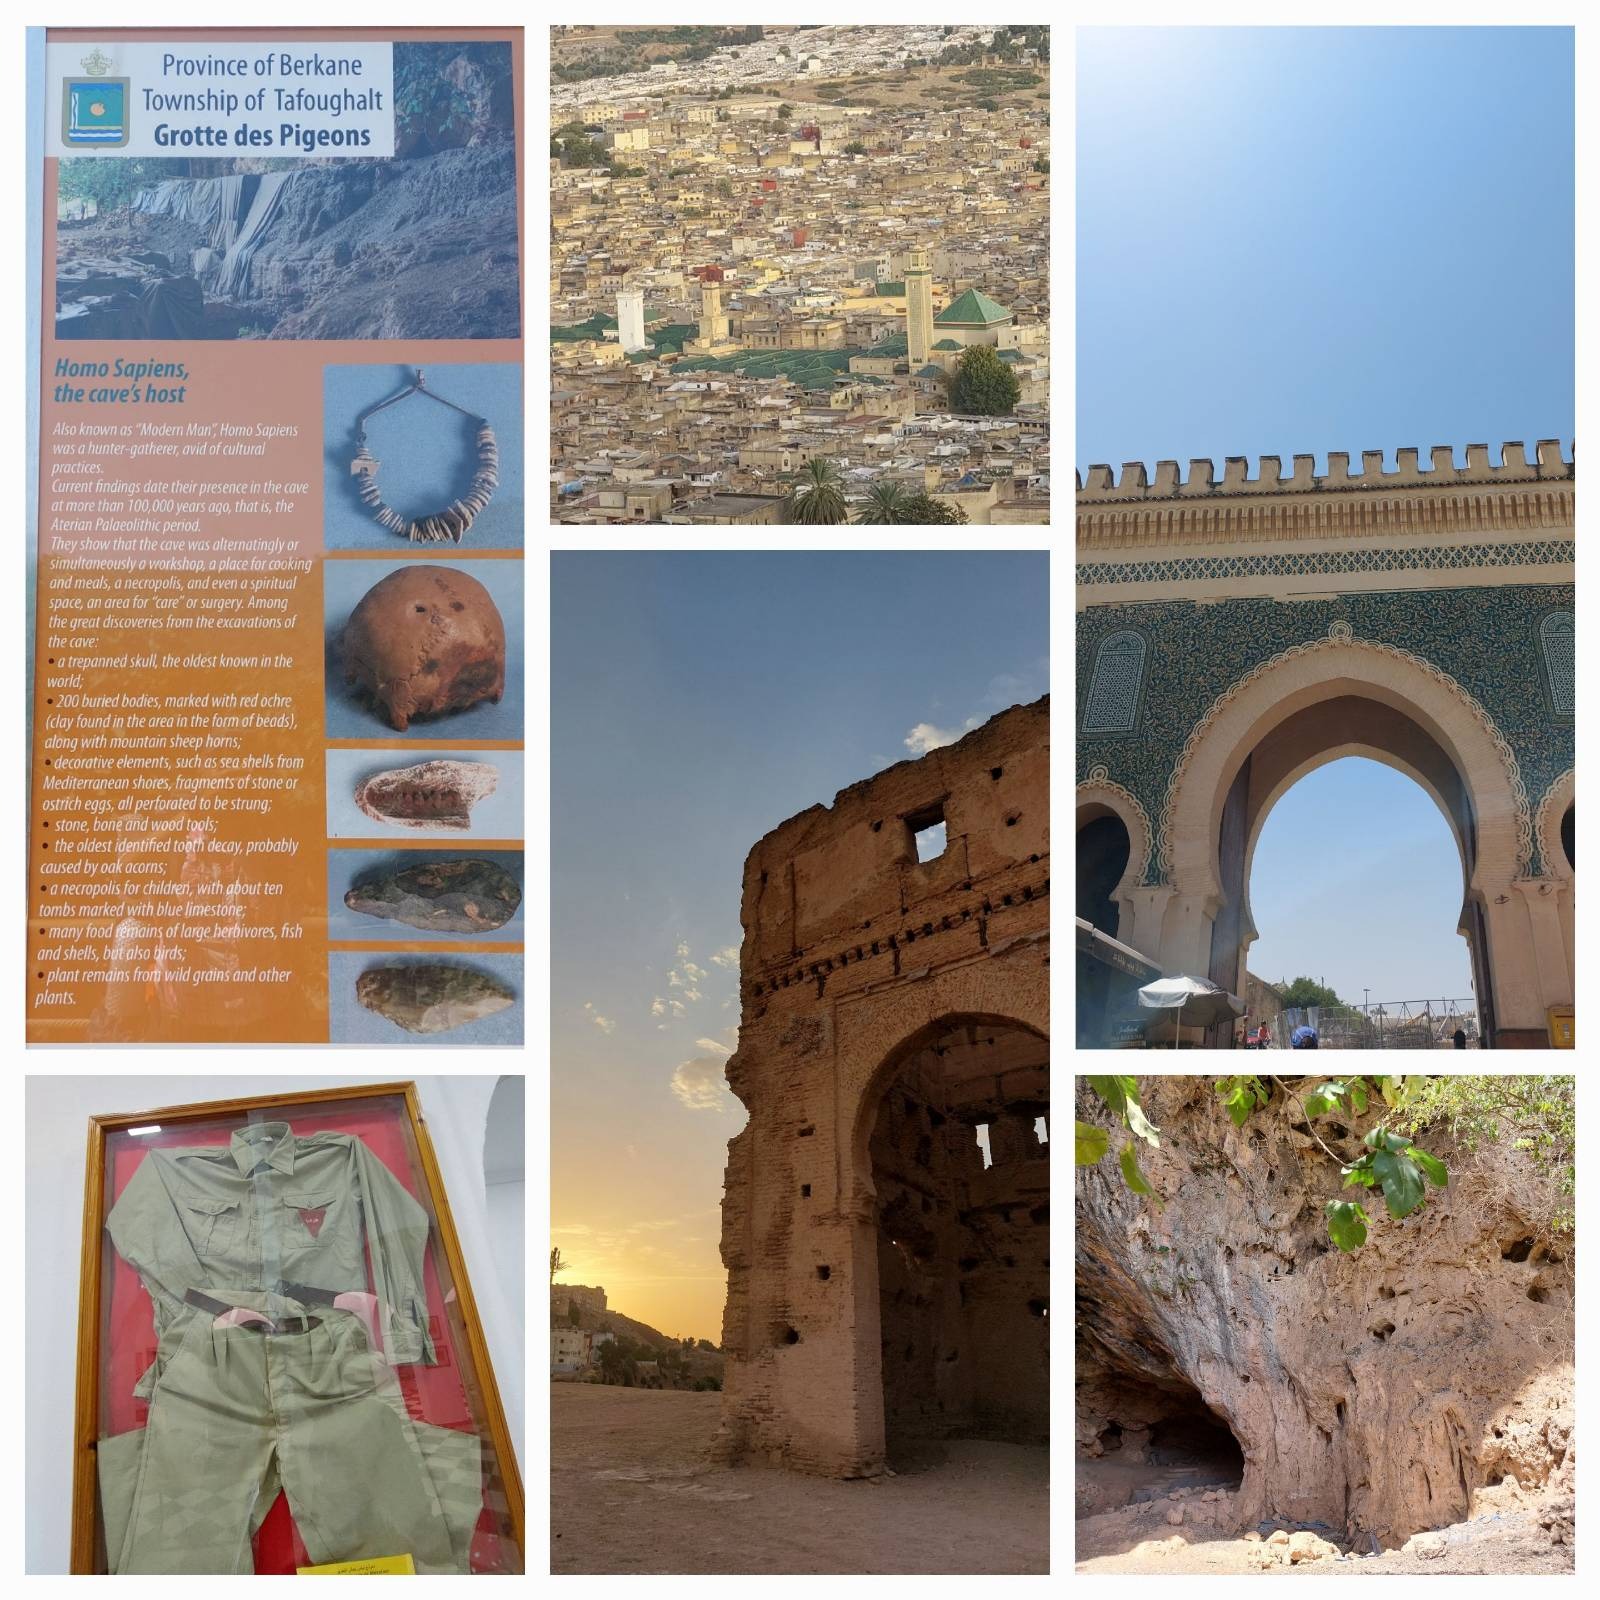 Moroccan history